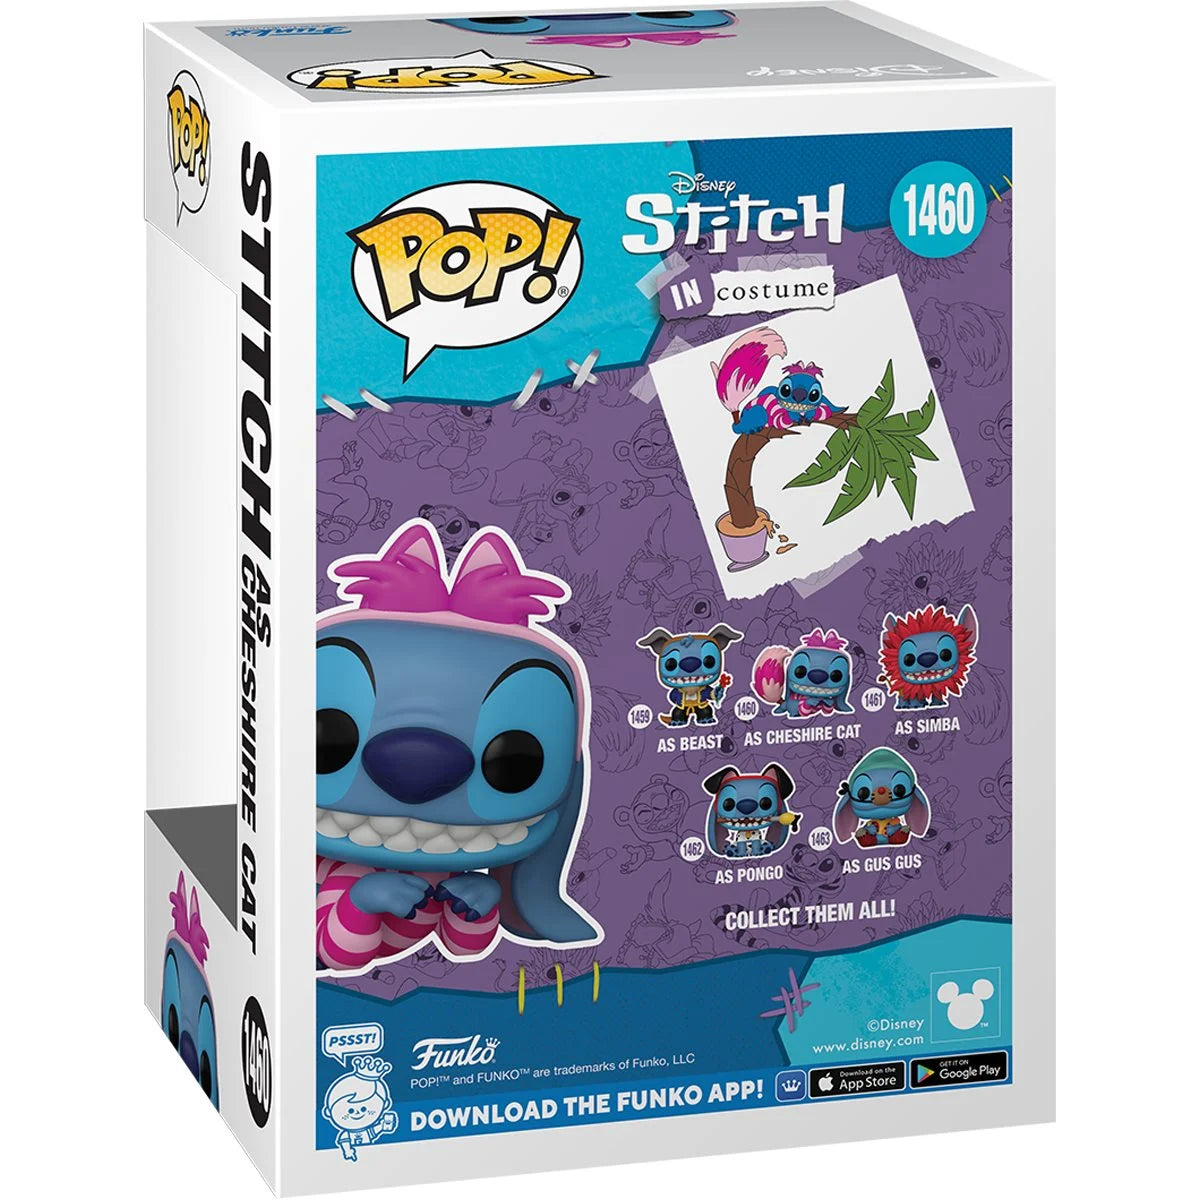 Disney Lilo & Stitch as Cheshire Cat Funko Pop! Vinyl Toy Figure #1460